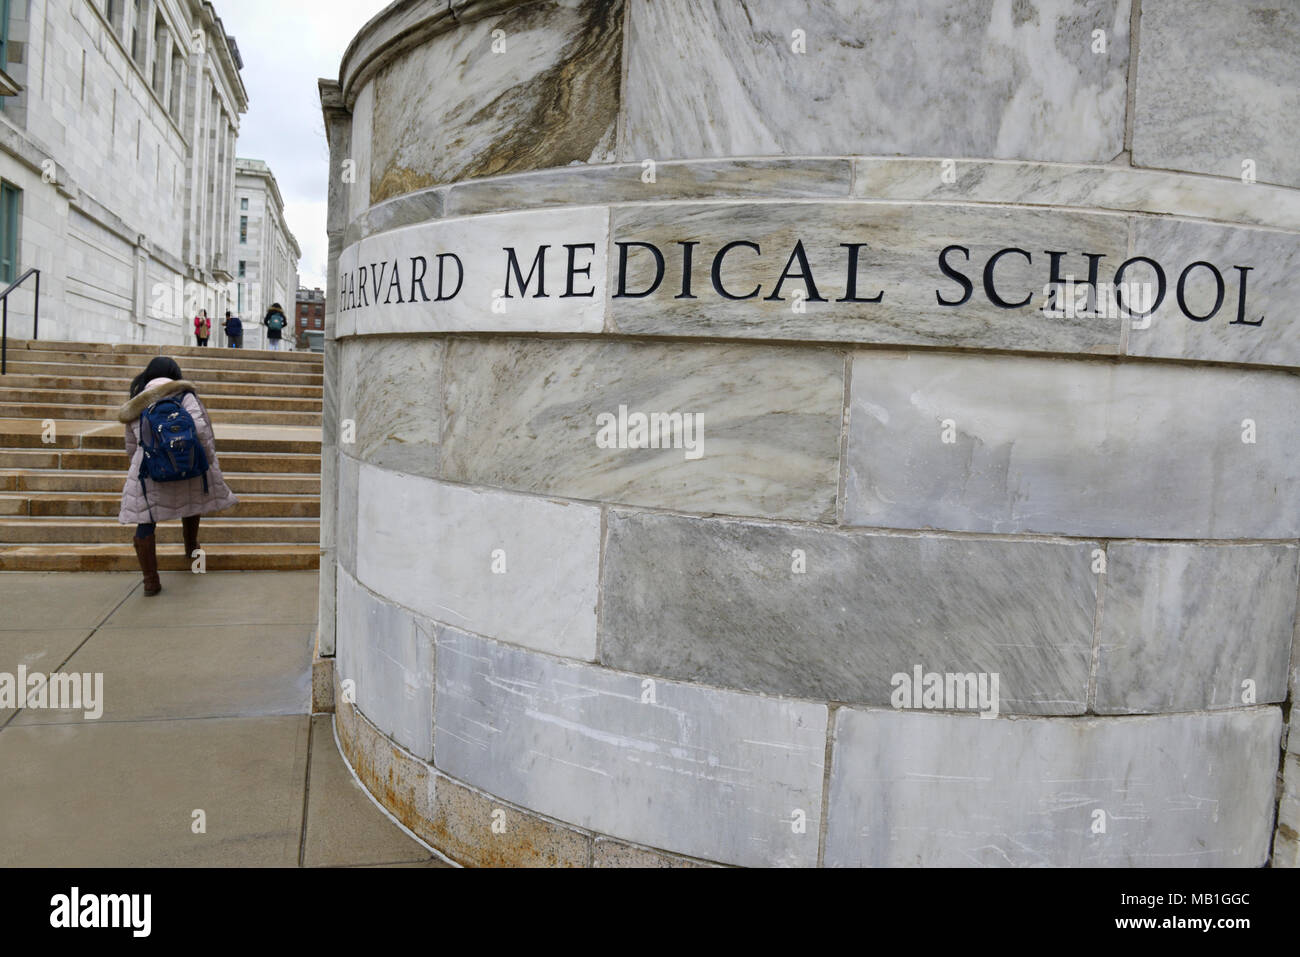 Harvard Medical School ingresso, Boston, MA Foto Stock